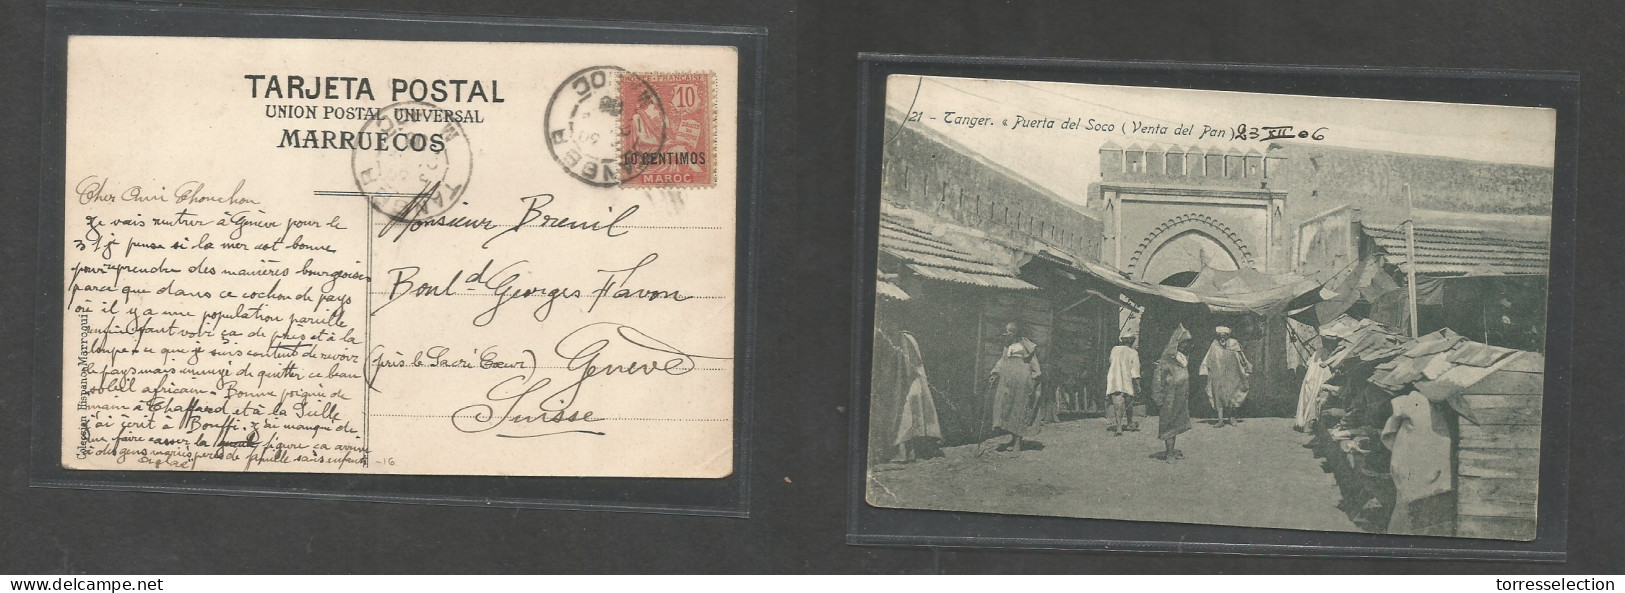 MARRUECOS - French. 1906. Tanger - Switzerland, Geneva. Fkd Ppc. Spanish Currency 10c Ovptd Red, Tied Cds. Fine. SALE. - Marocco (1956-...)